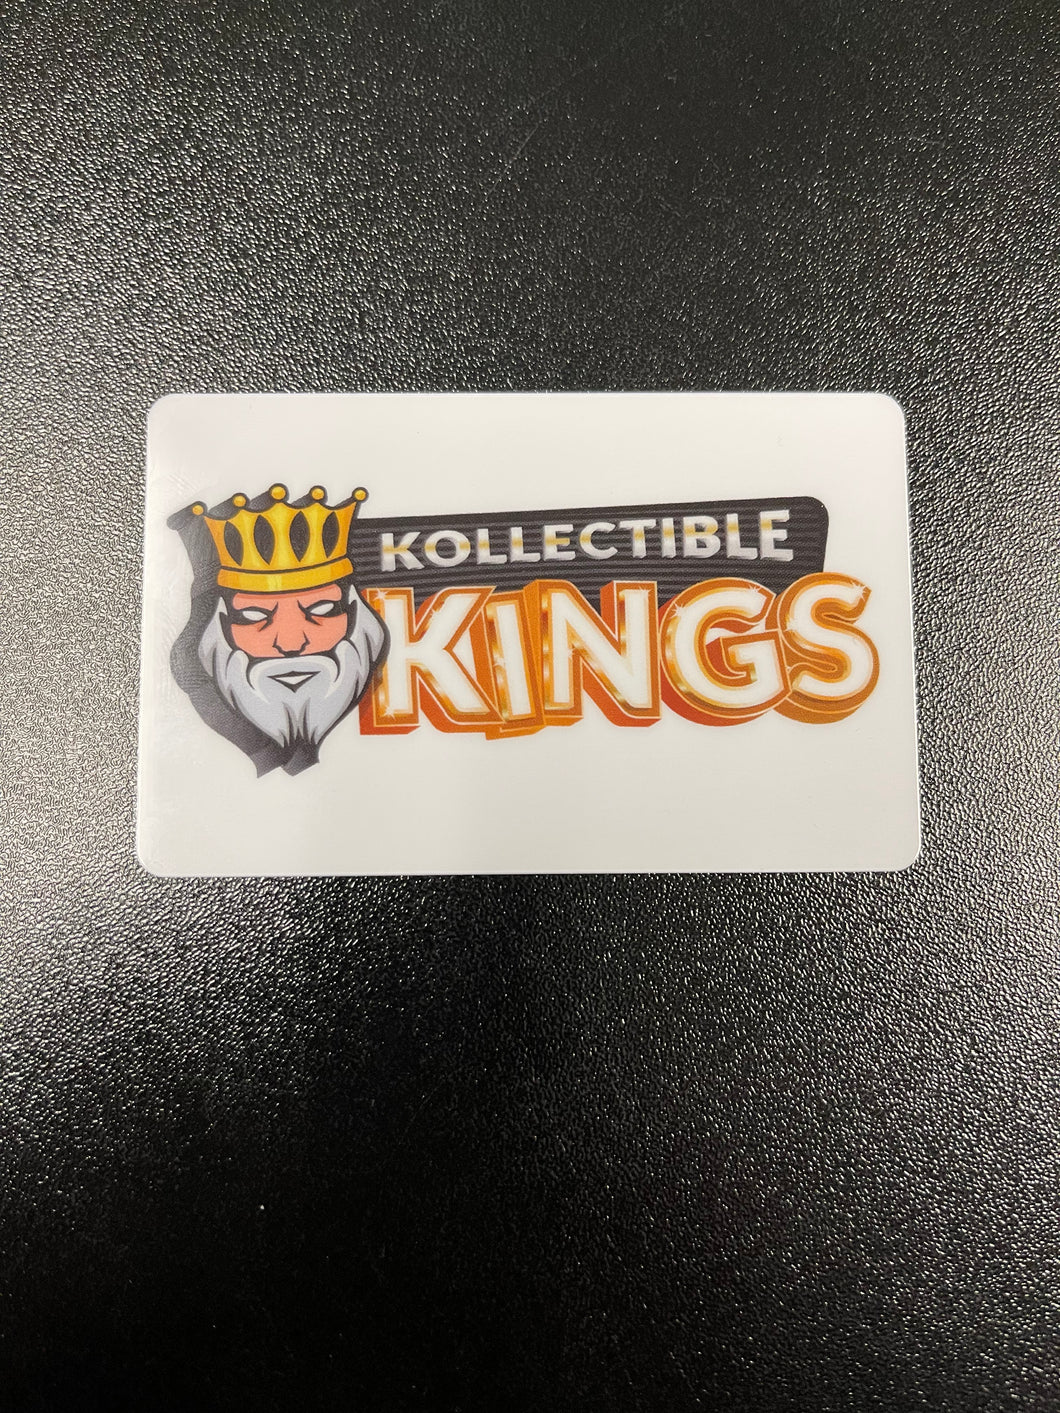 Kollectible Kings Gift Card